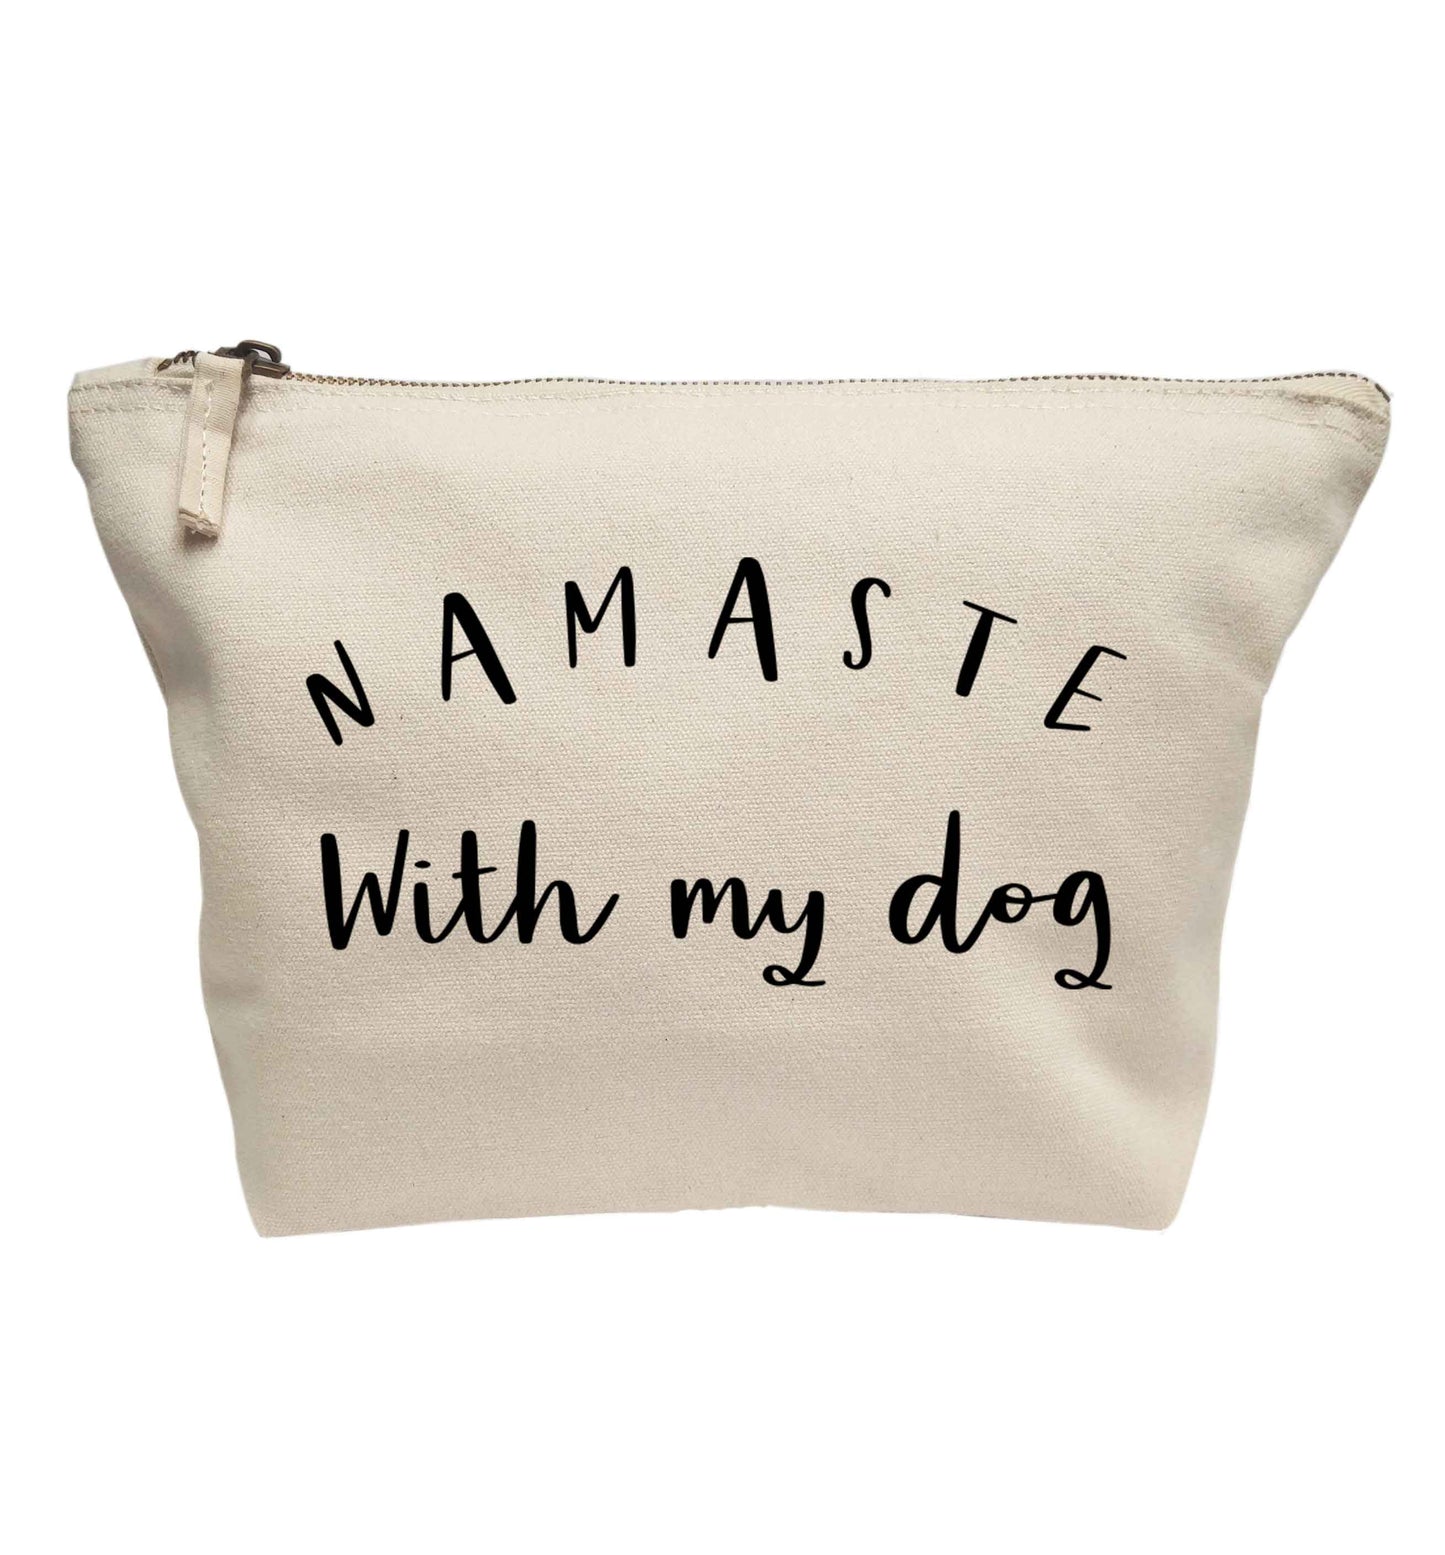 Namaste with my dog | makeup / wash bag